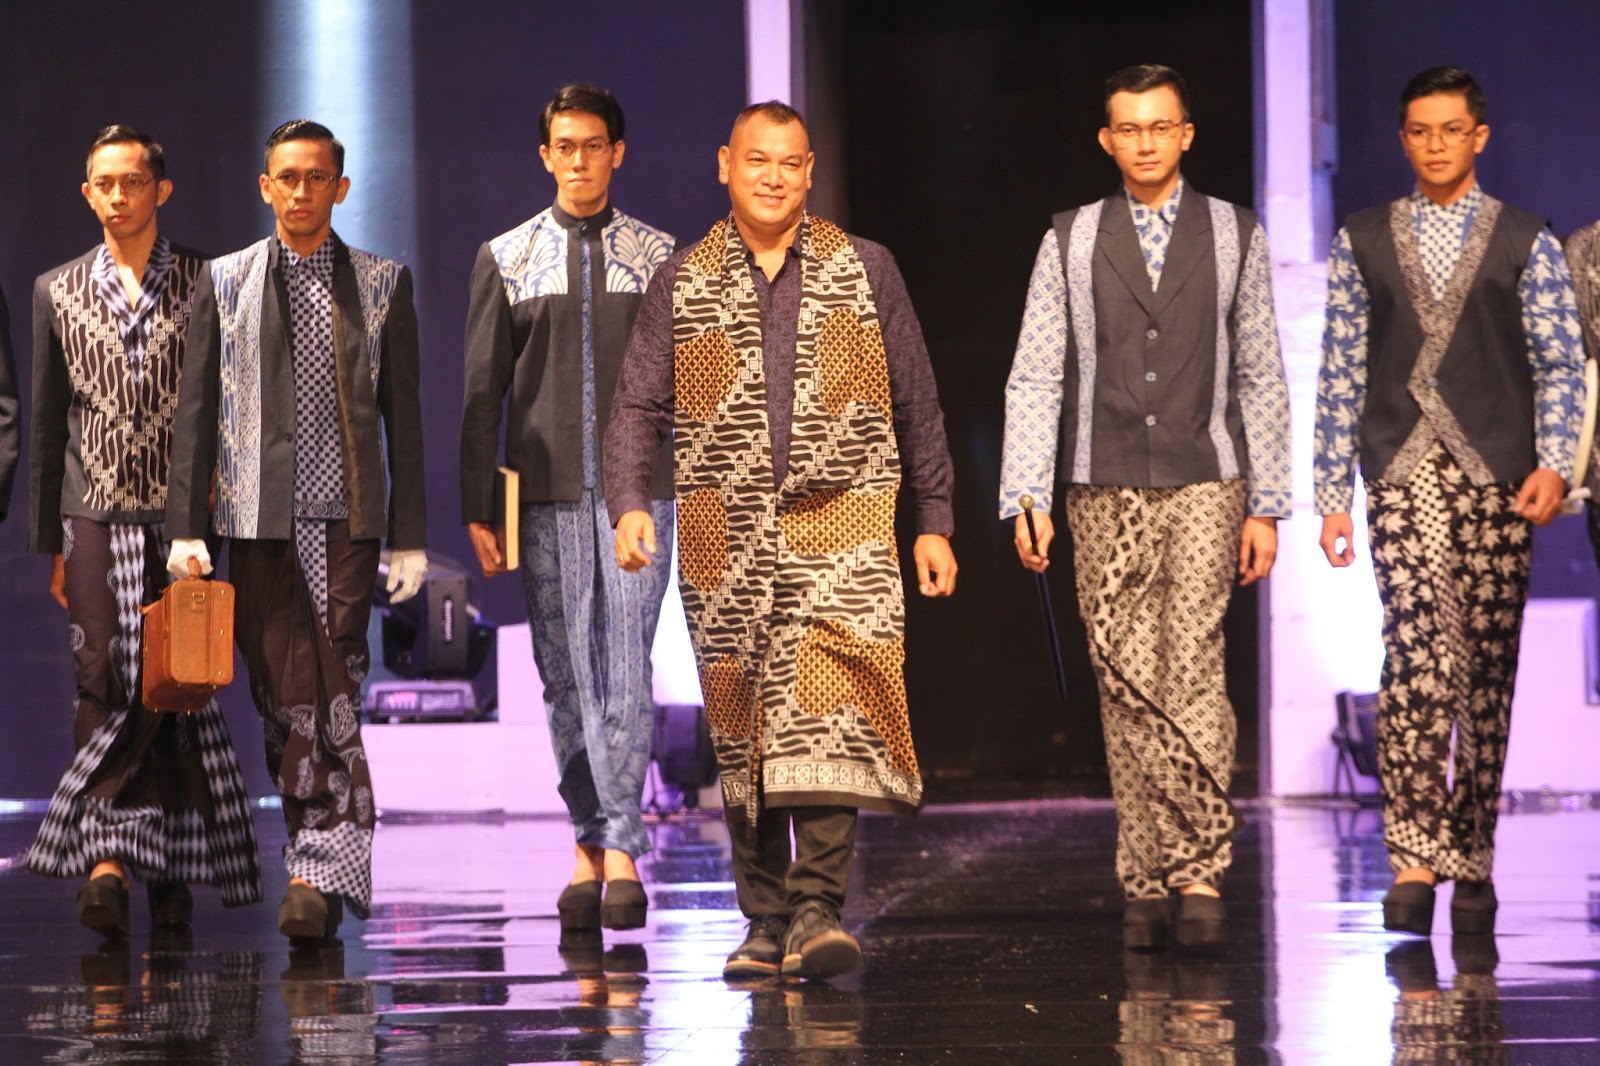  Desain Baju Batik Fashion Show  Klopdesain